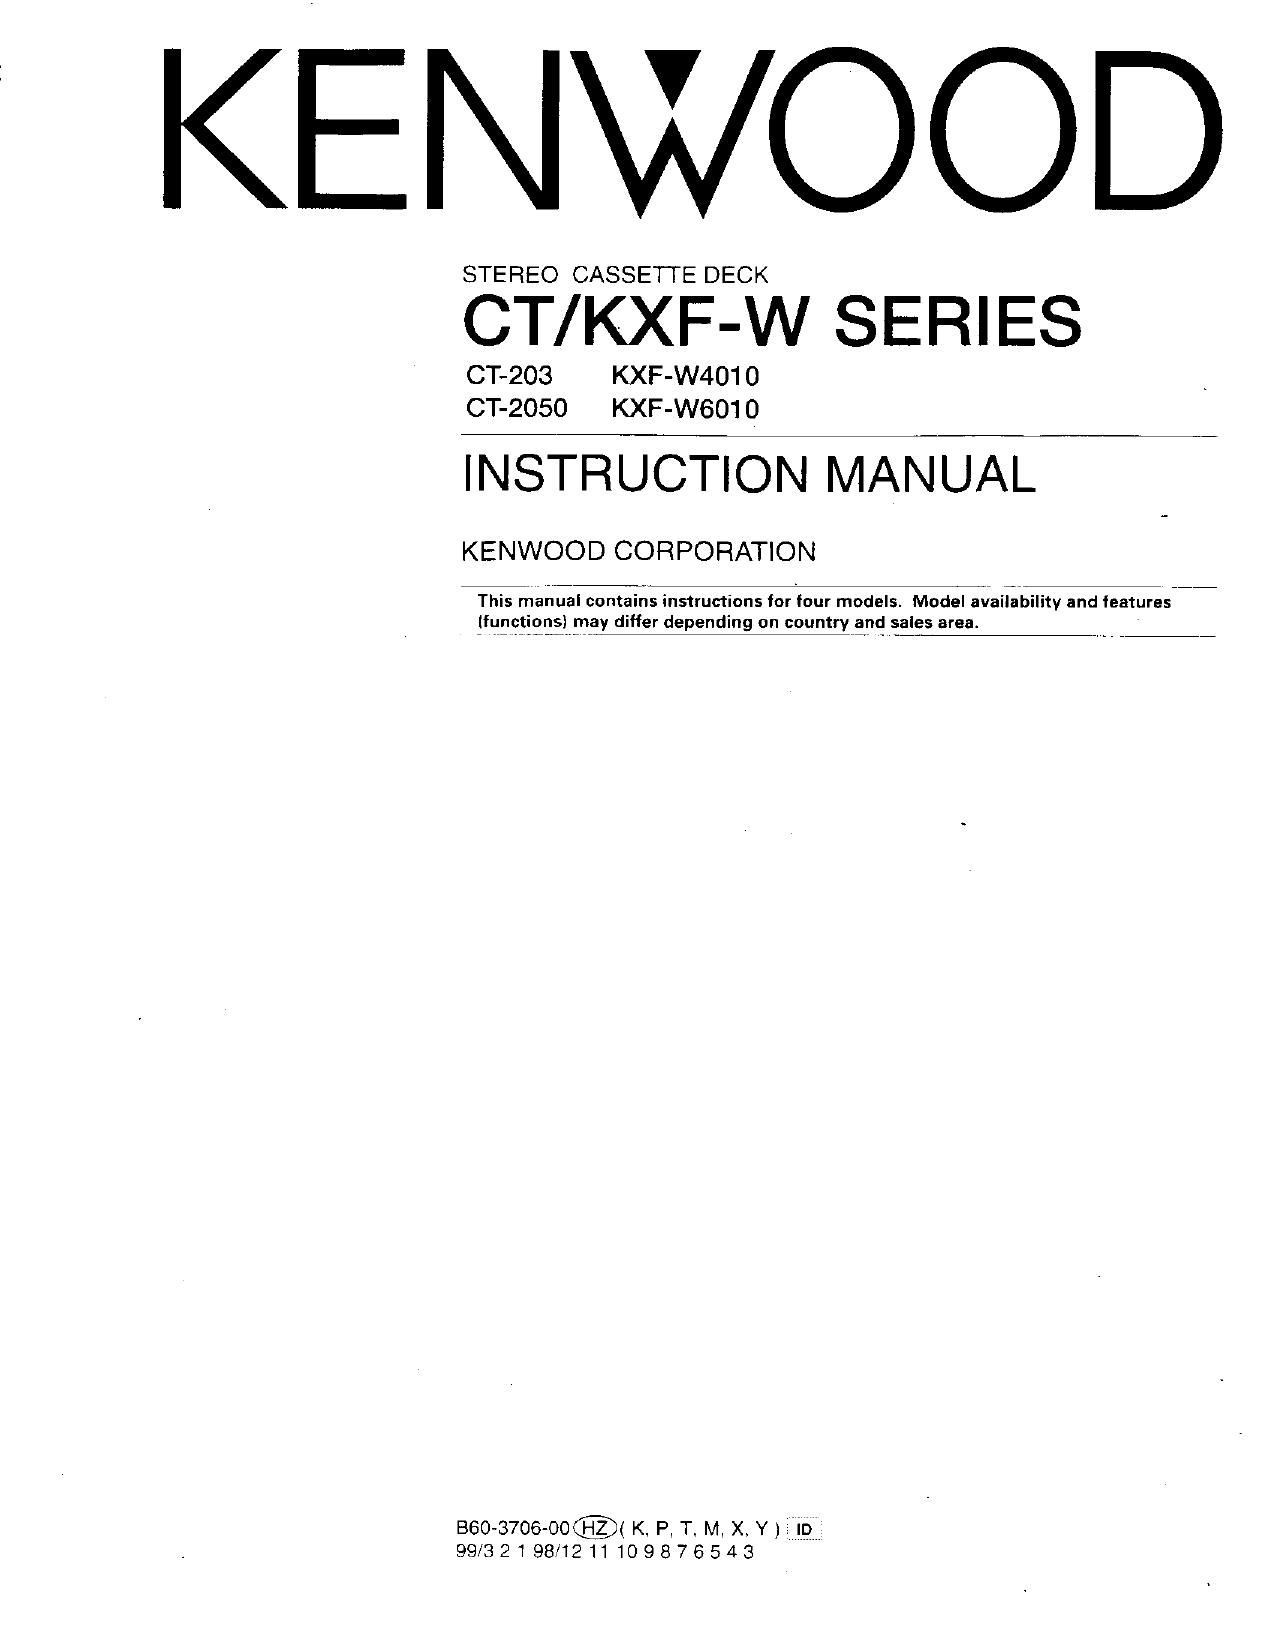 Kenwood CT 2050 Owners Manual